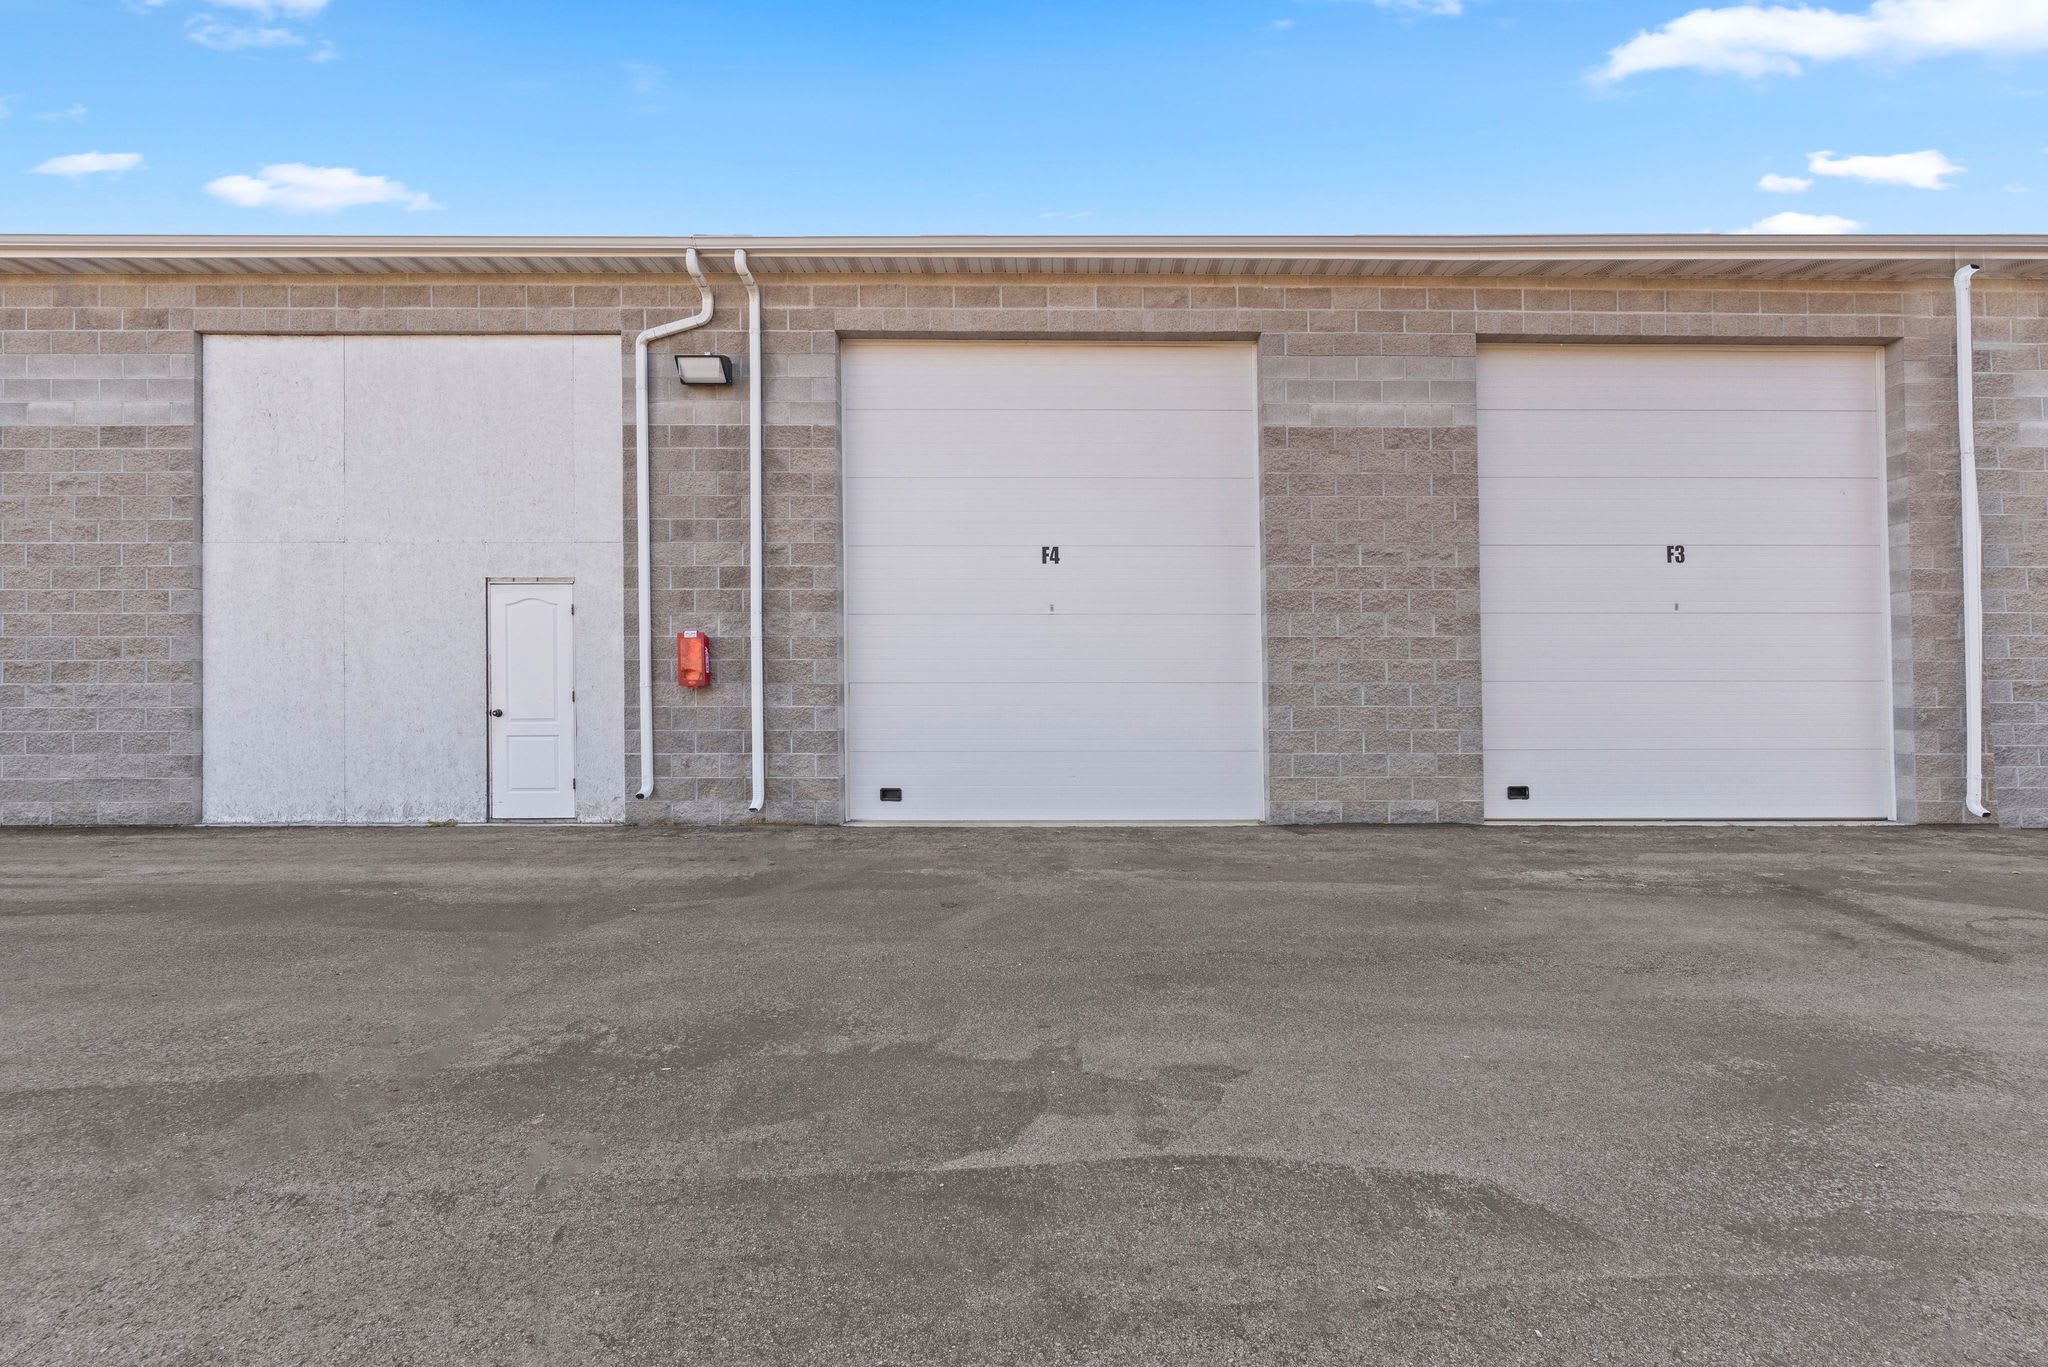 Closed doorway to units at Stor'em Self Storage in Mapleton, Utah